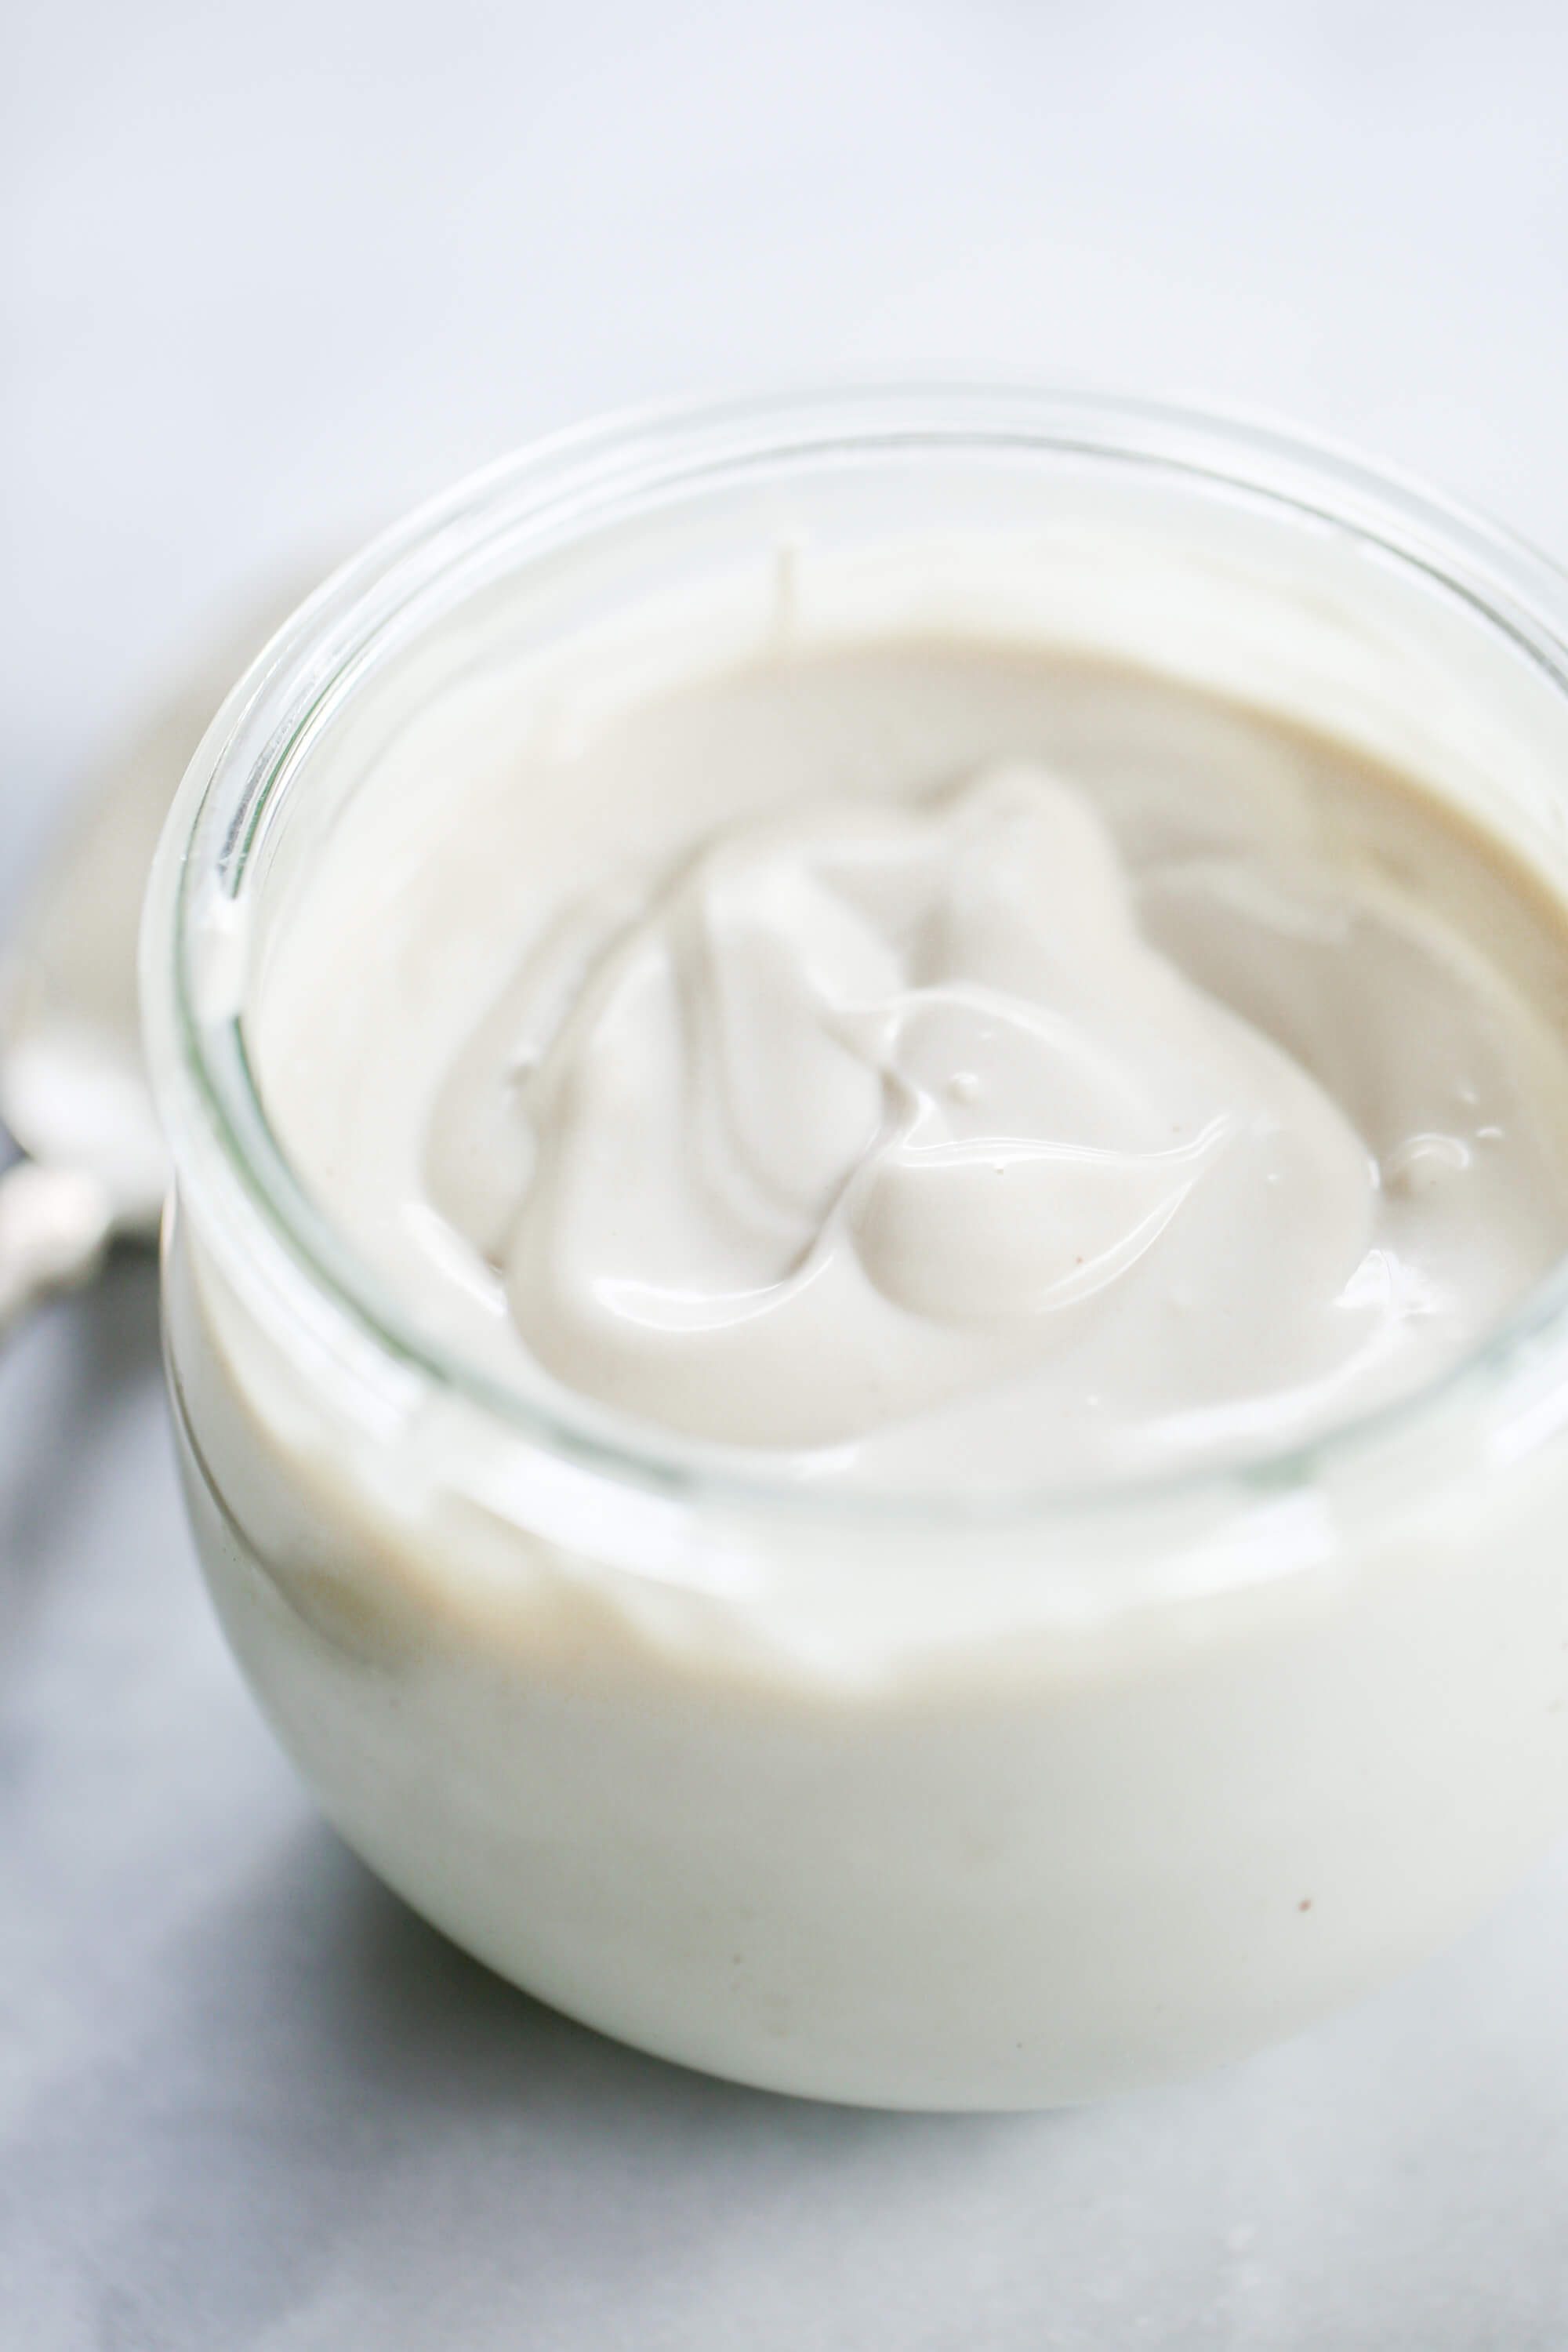 cashew milk yogurt recipe